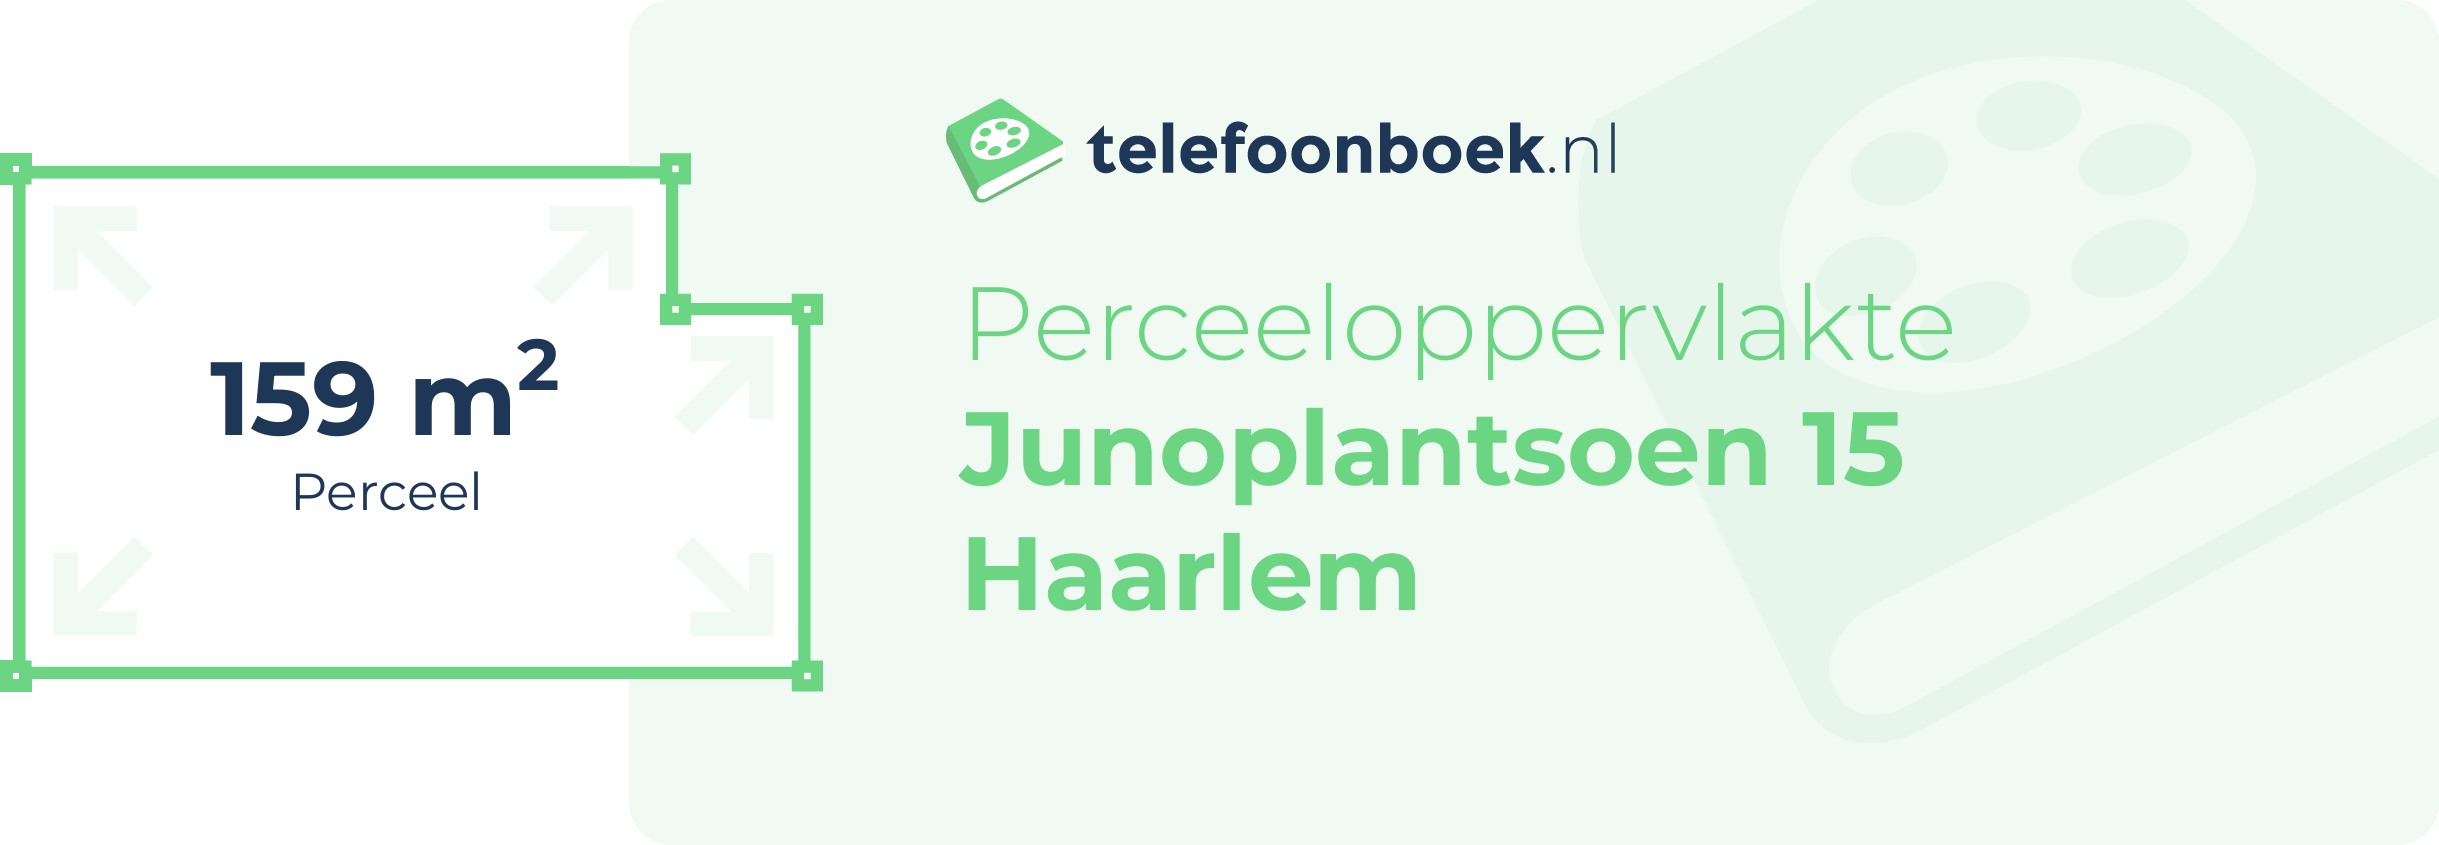 Perceeloppervlakte Junoplantsoen 15 Haarlem